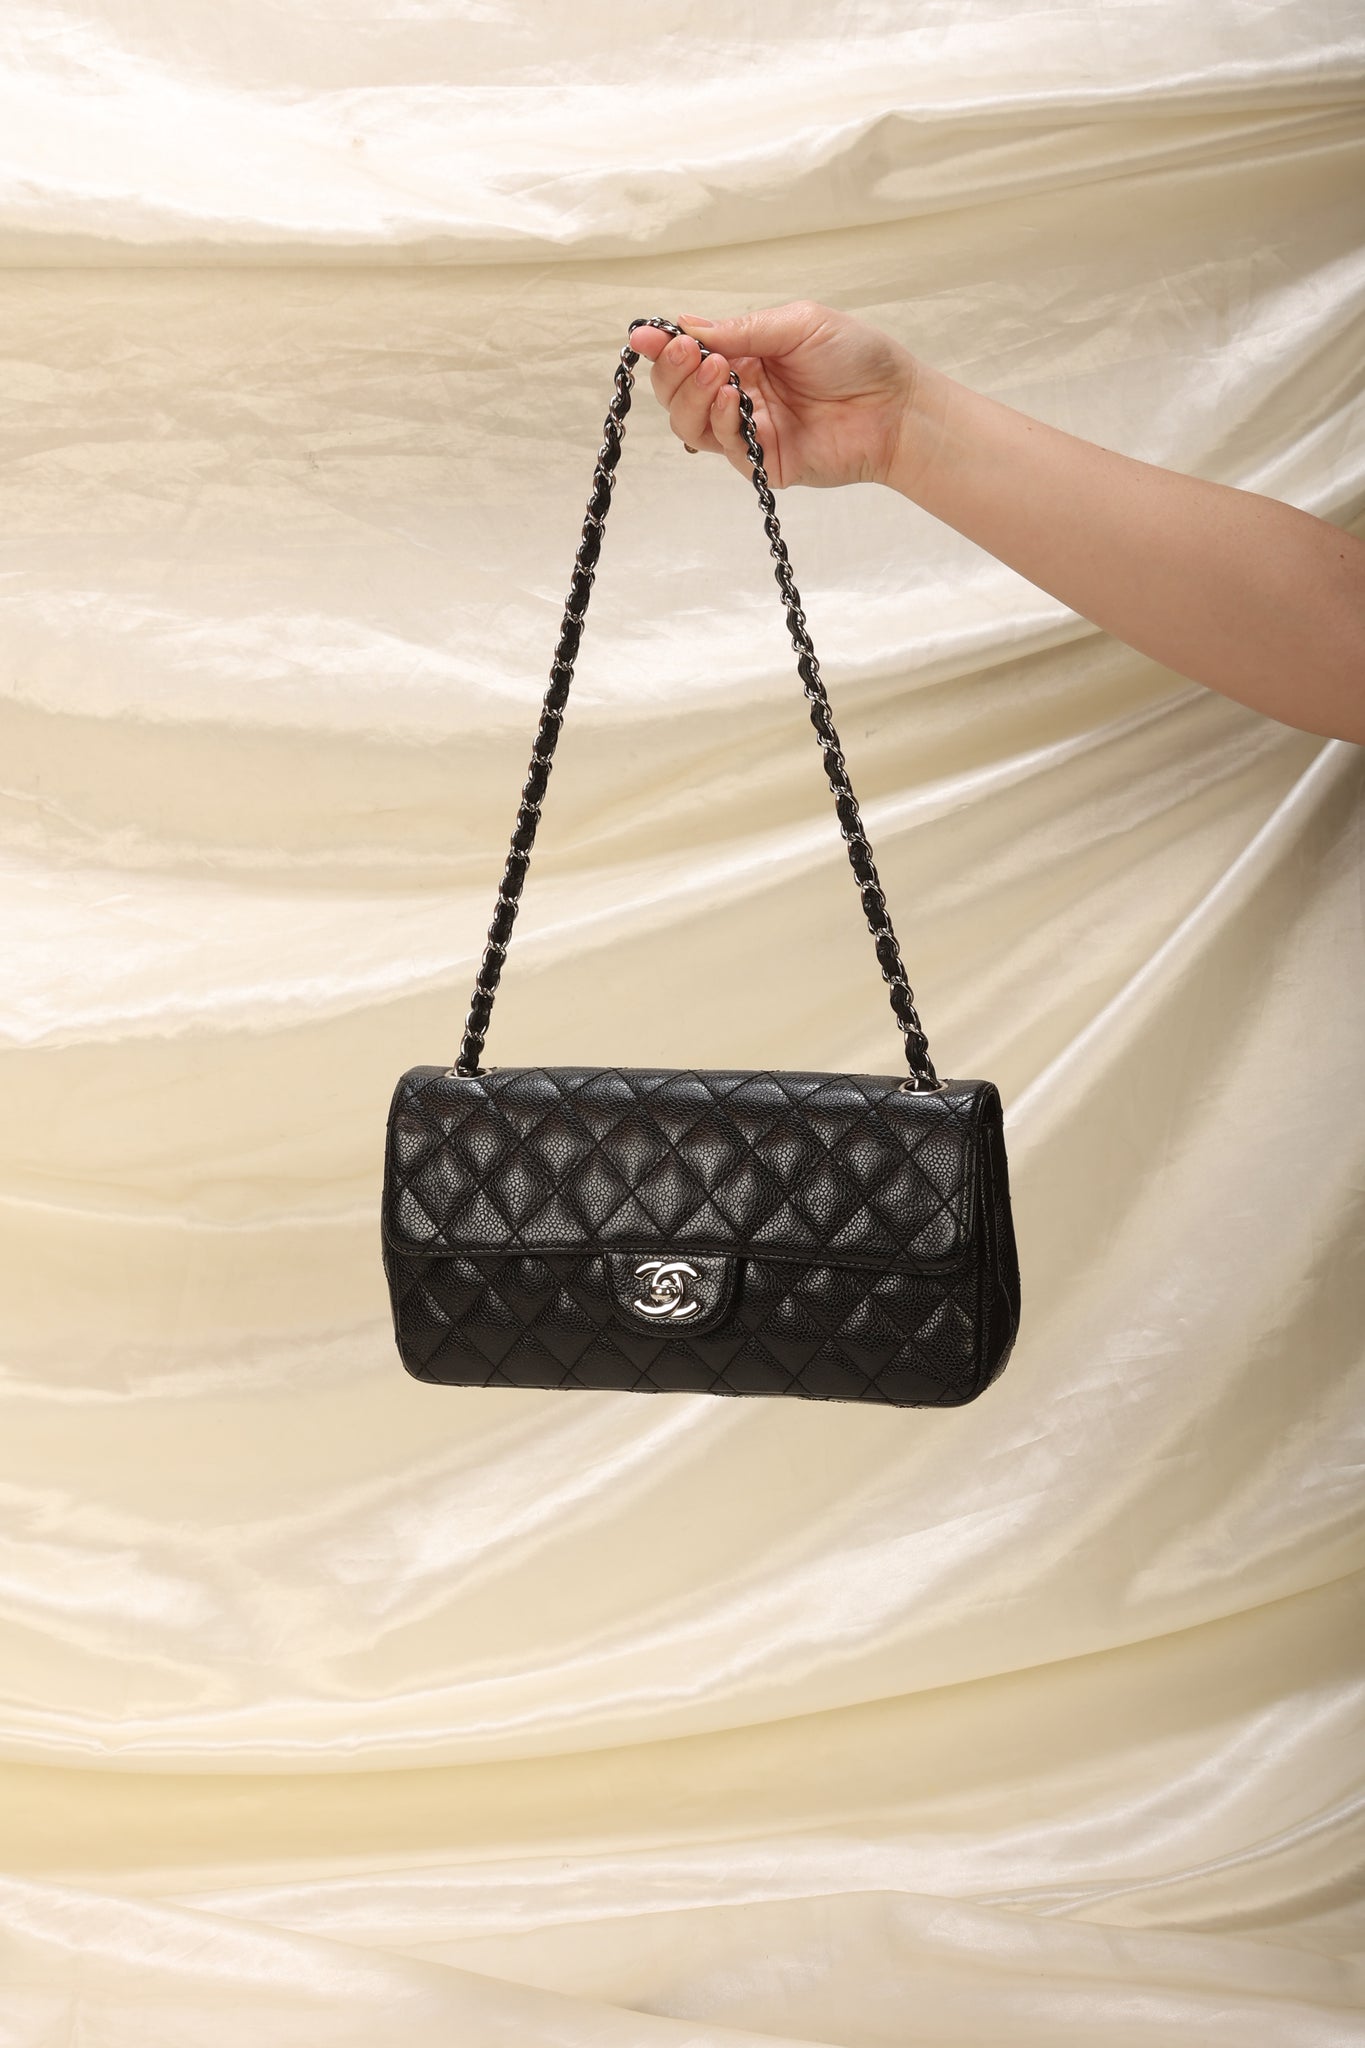 Authentic Chanel East West Flap Shoulder Bag in Black Caviar